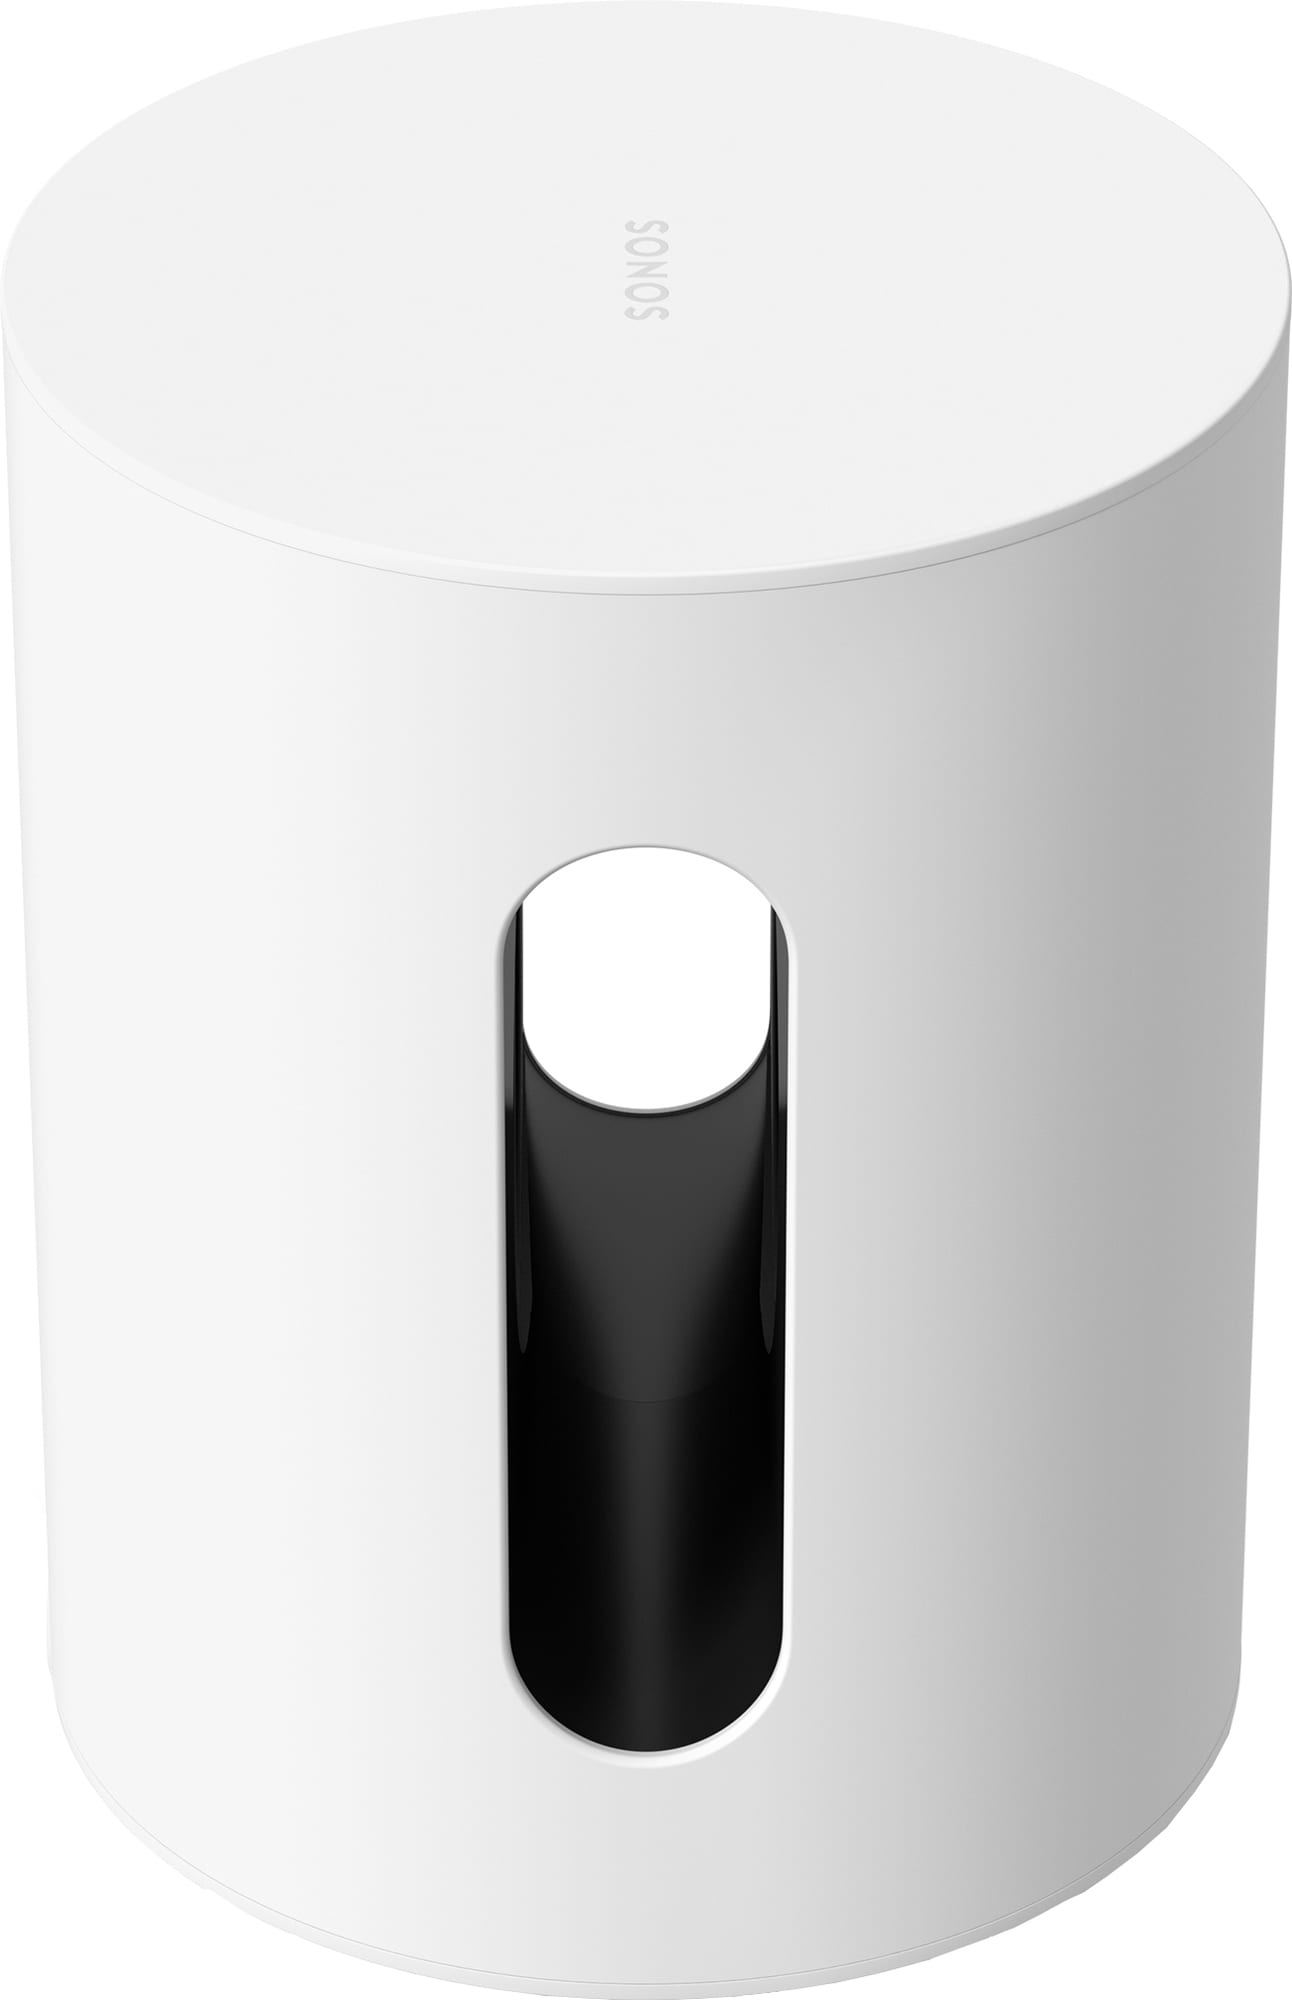 Sonos Sub wireless subwoofer (white) | Elgiganten